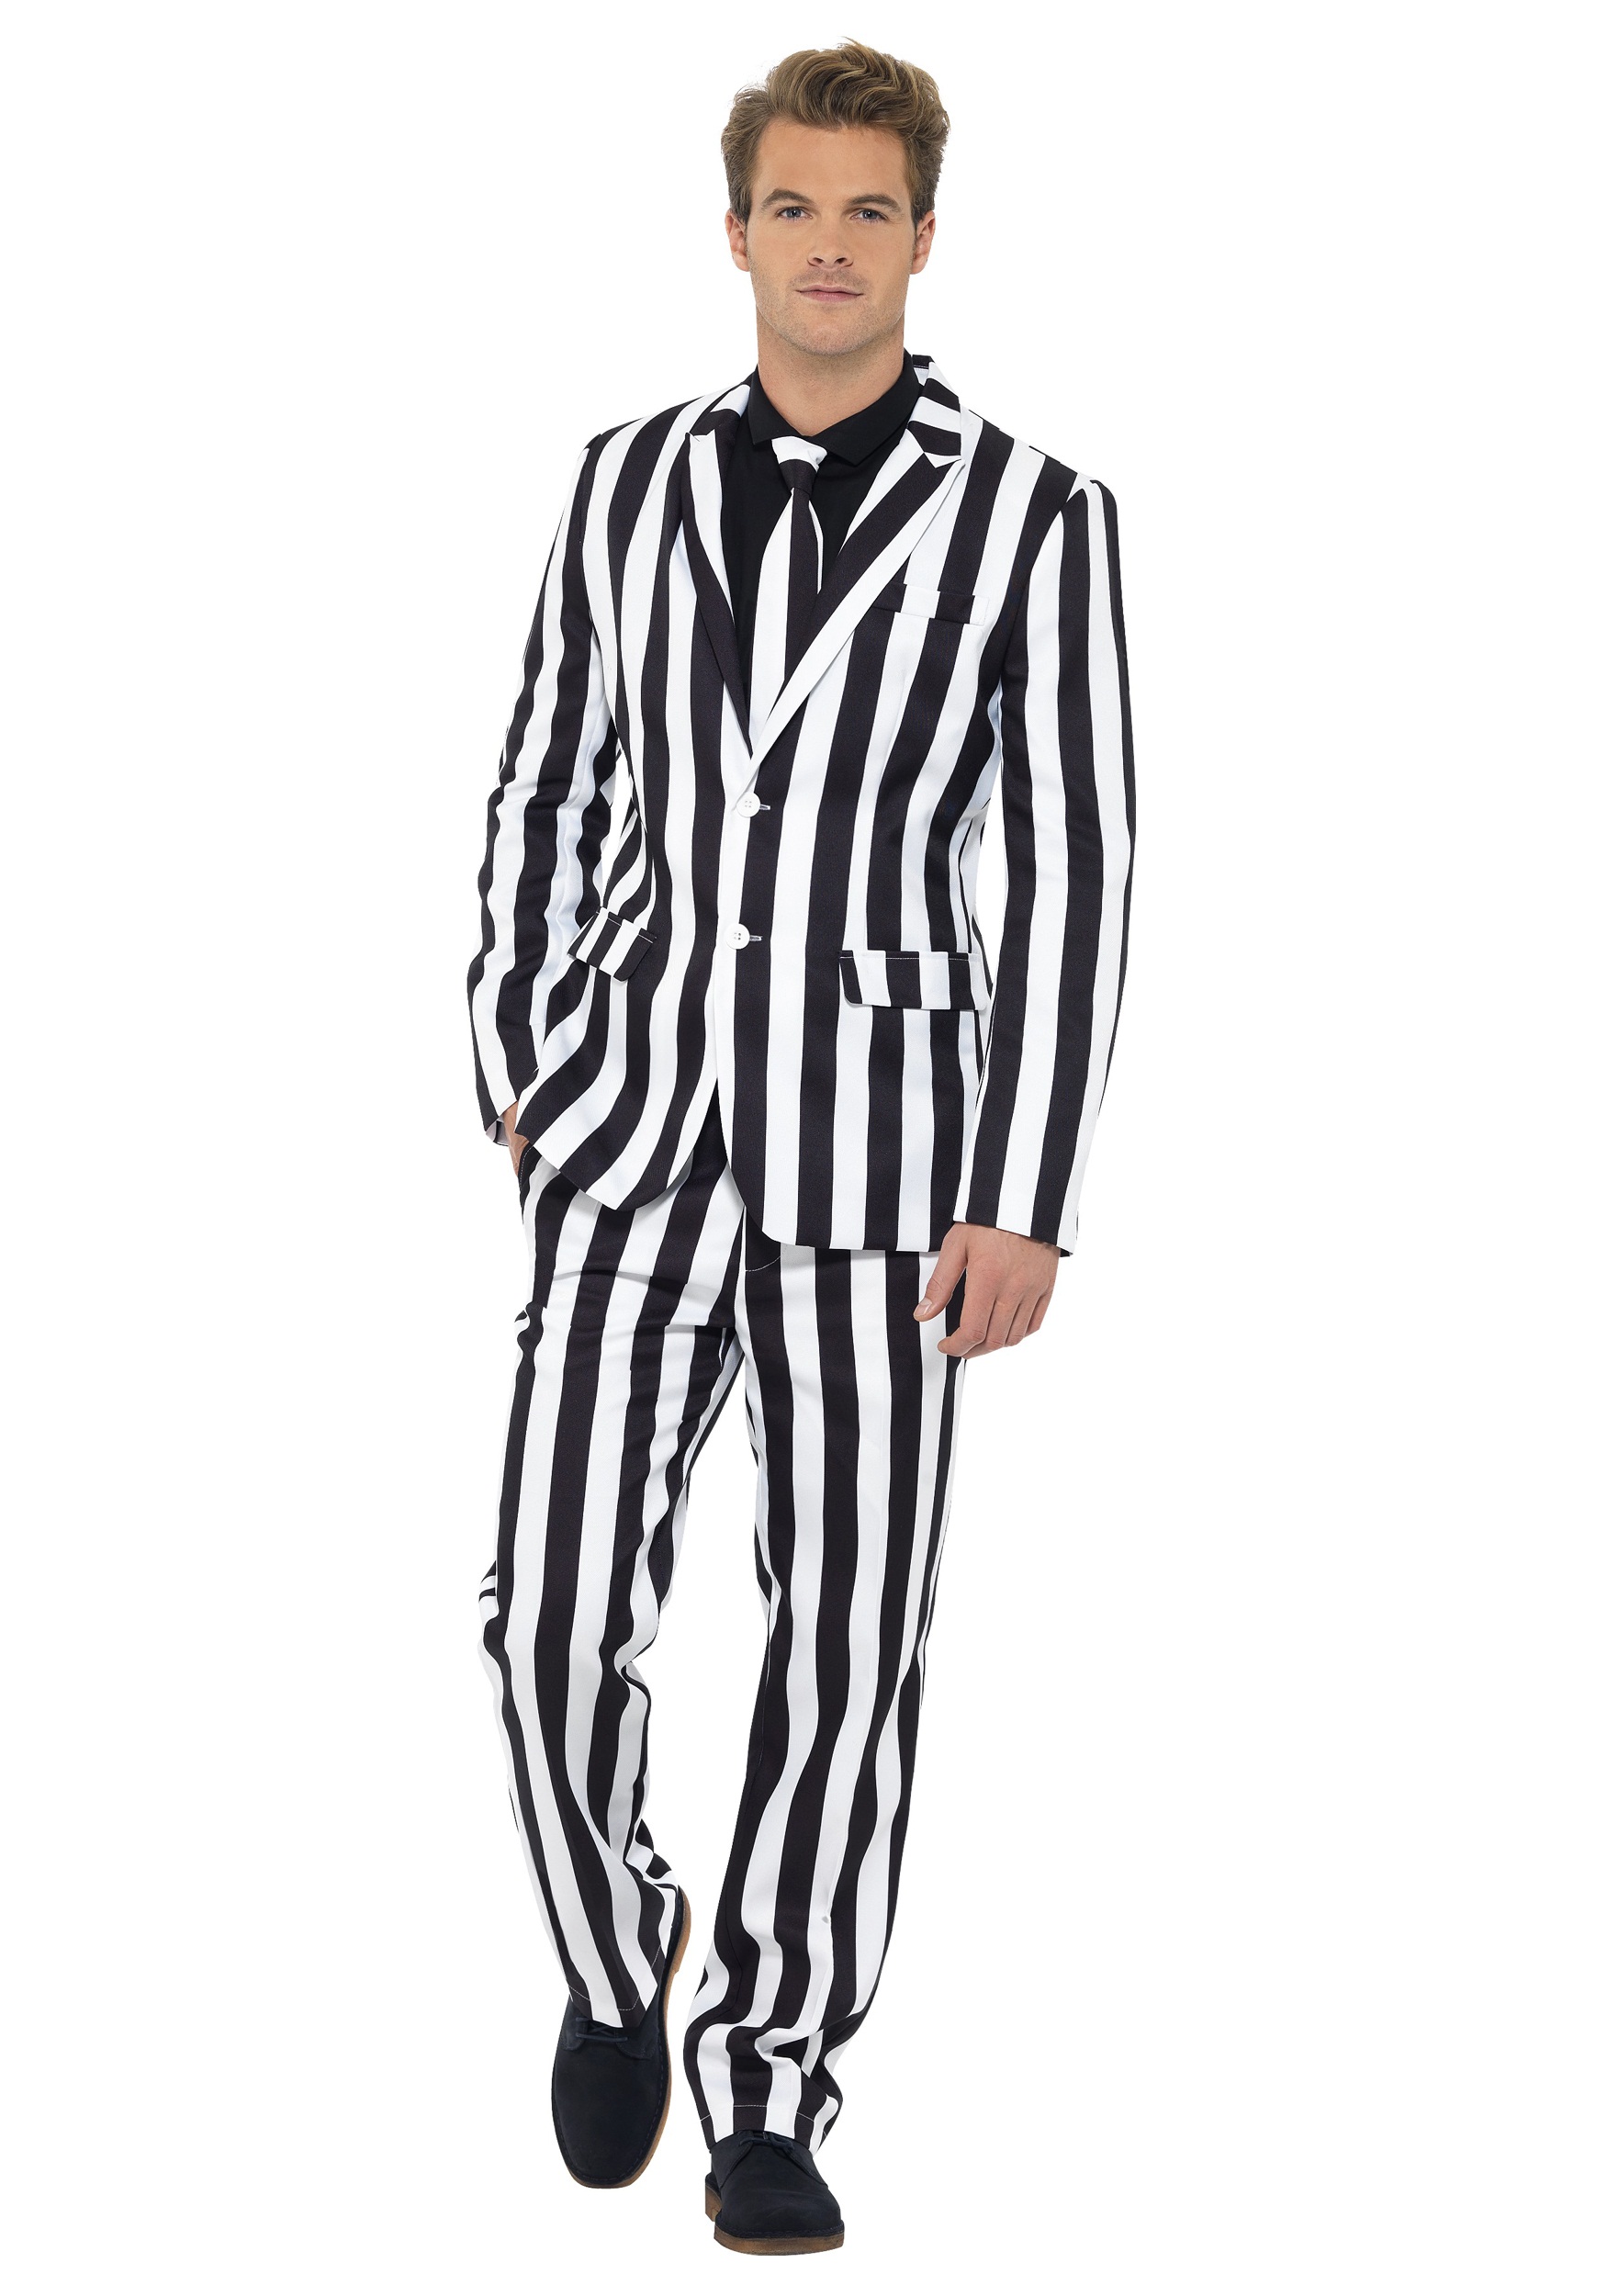 Photos - Fancy Dress Smiffys Men's Humbug Striped Suit Black/White